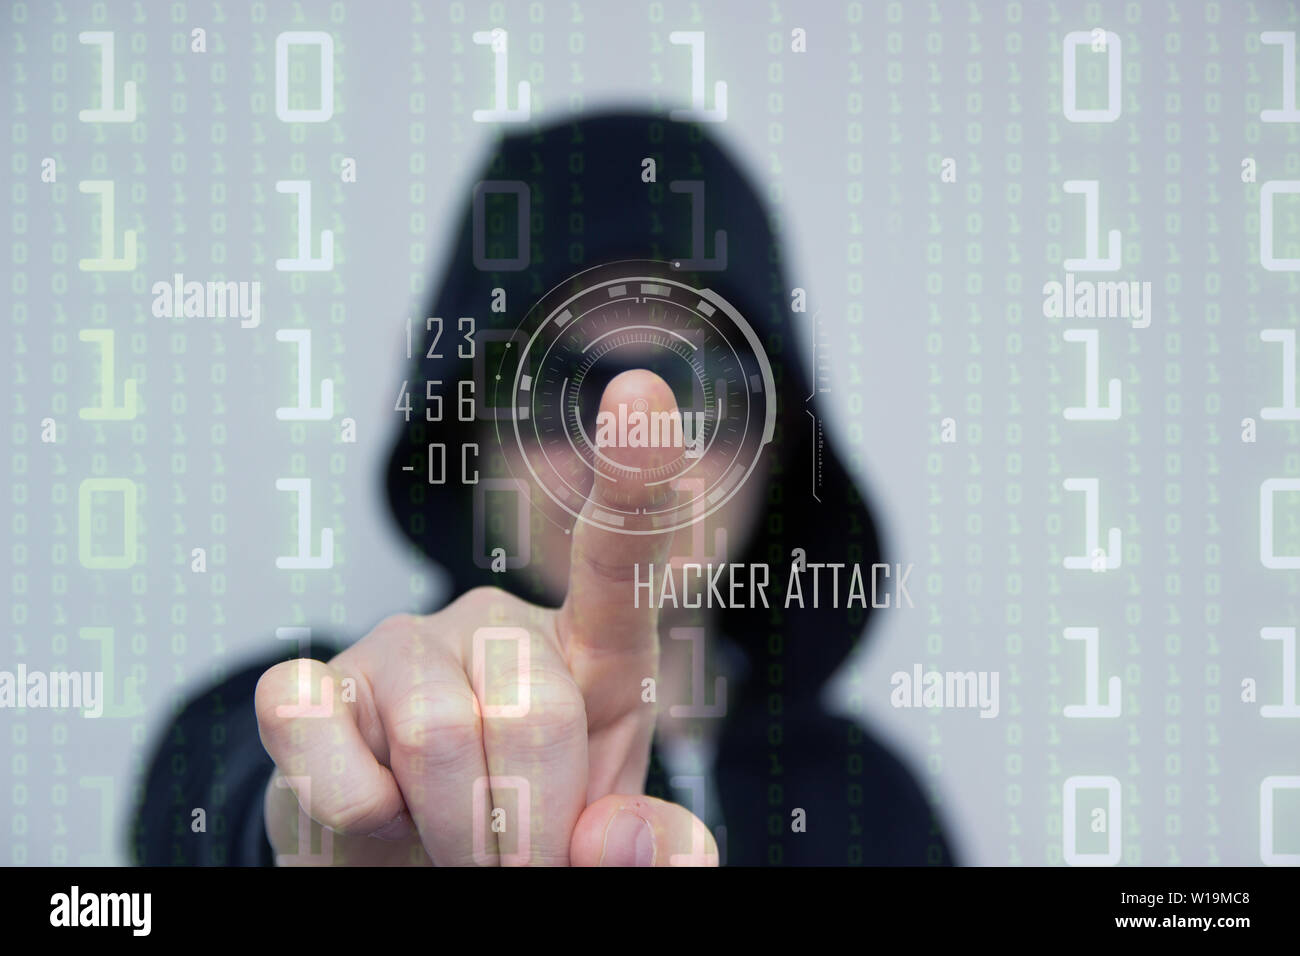 Hacking computer networks. Hacker hacks through digital interface. Stock Photo